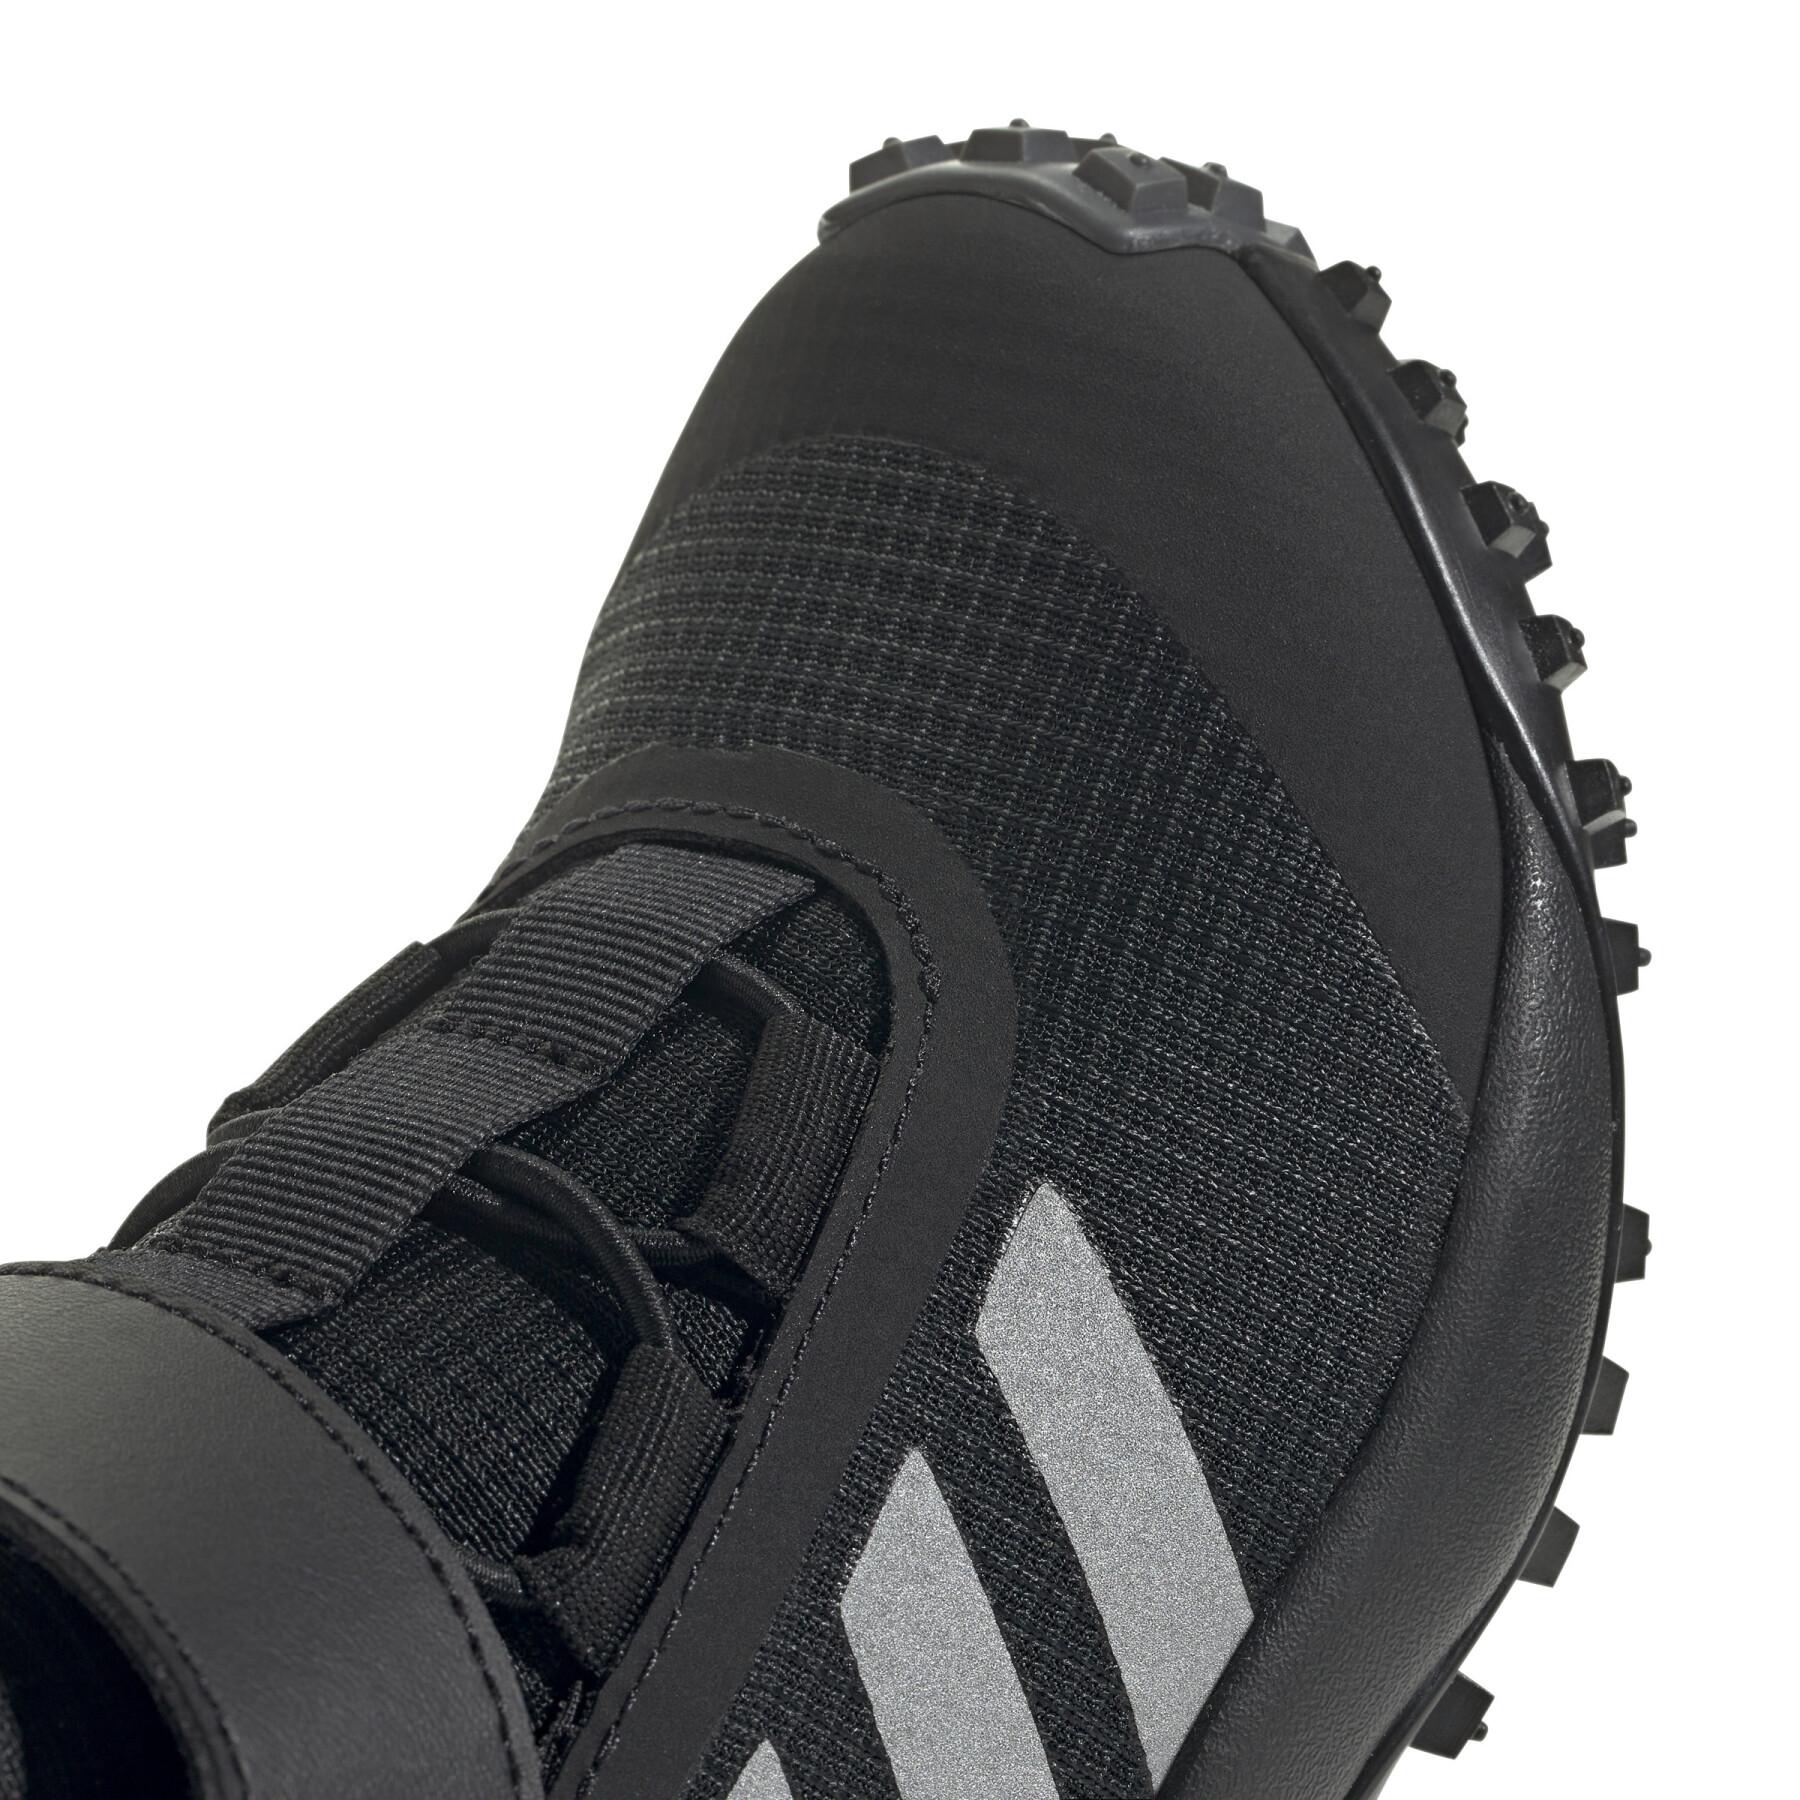 Children's Trail running shoes adidas Fortatrail